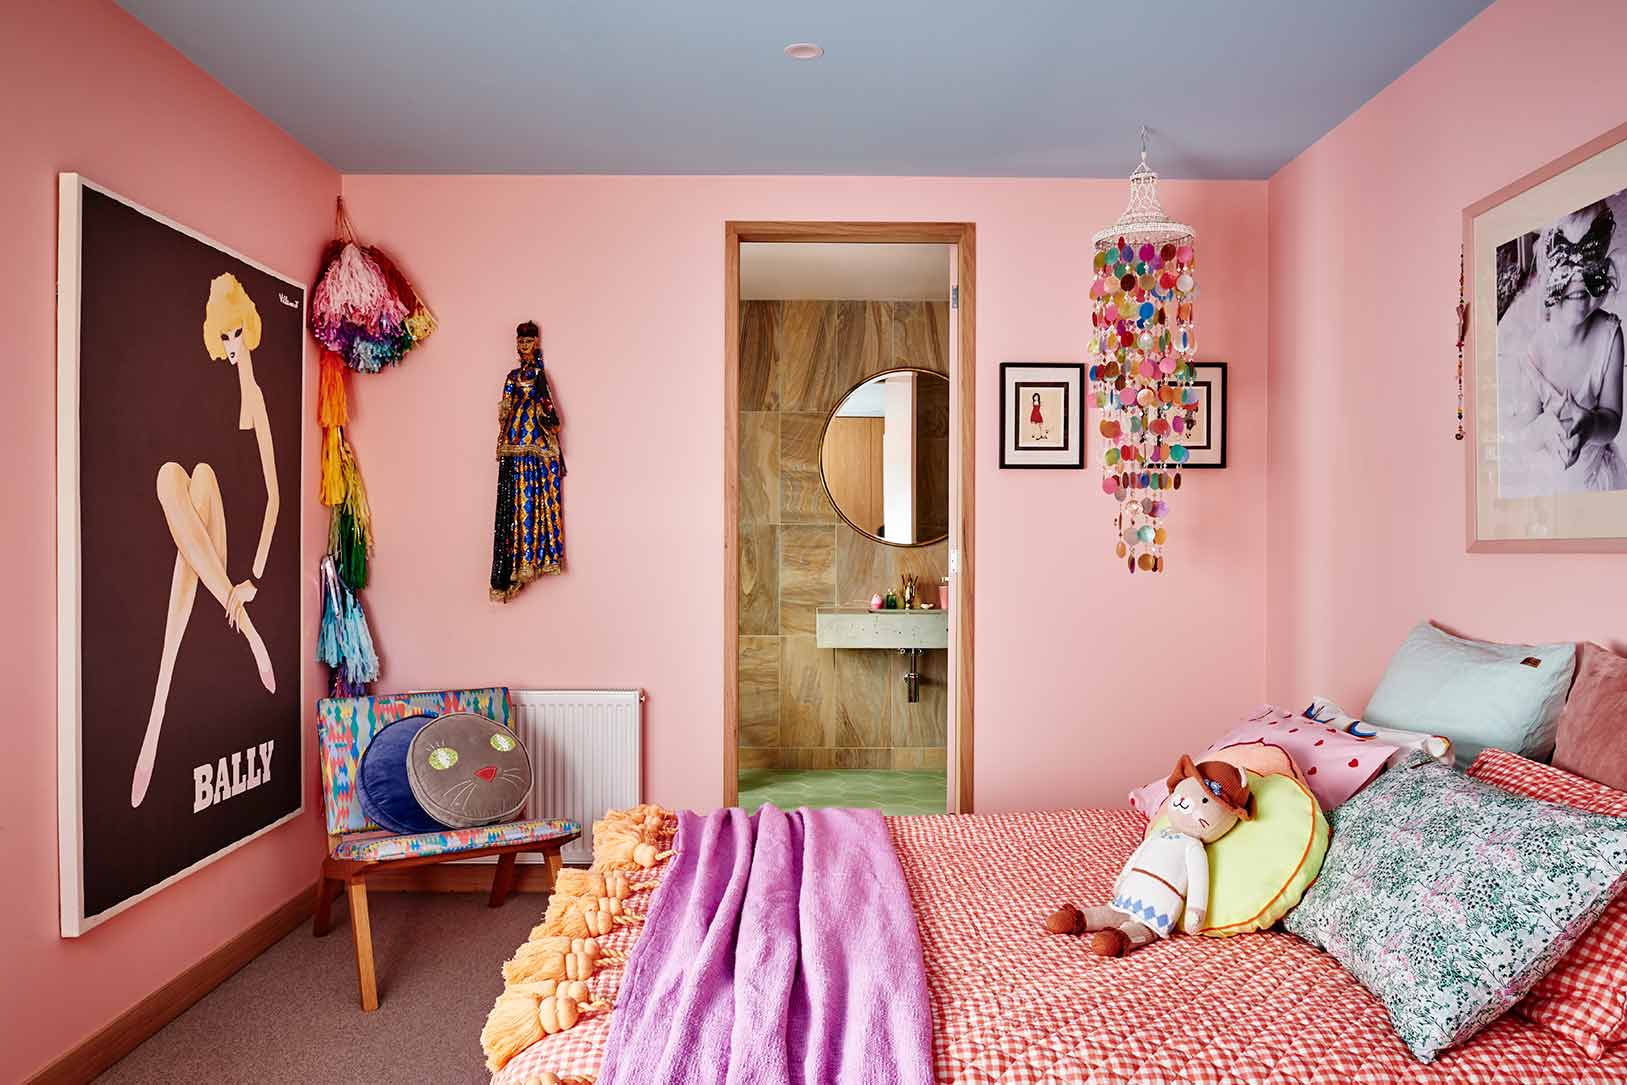 A colourful dream family home in Australia